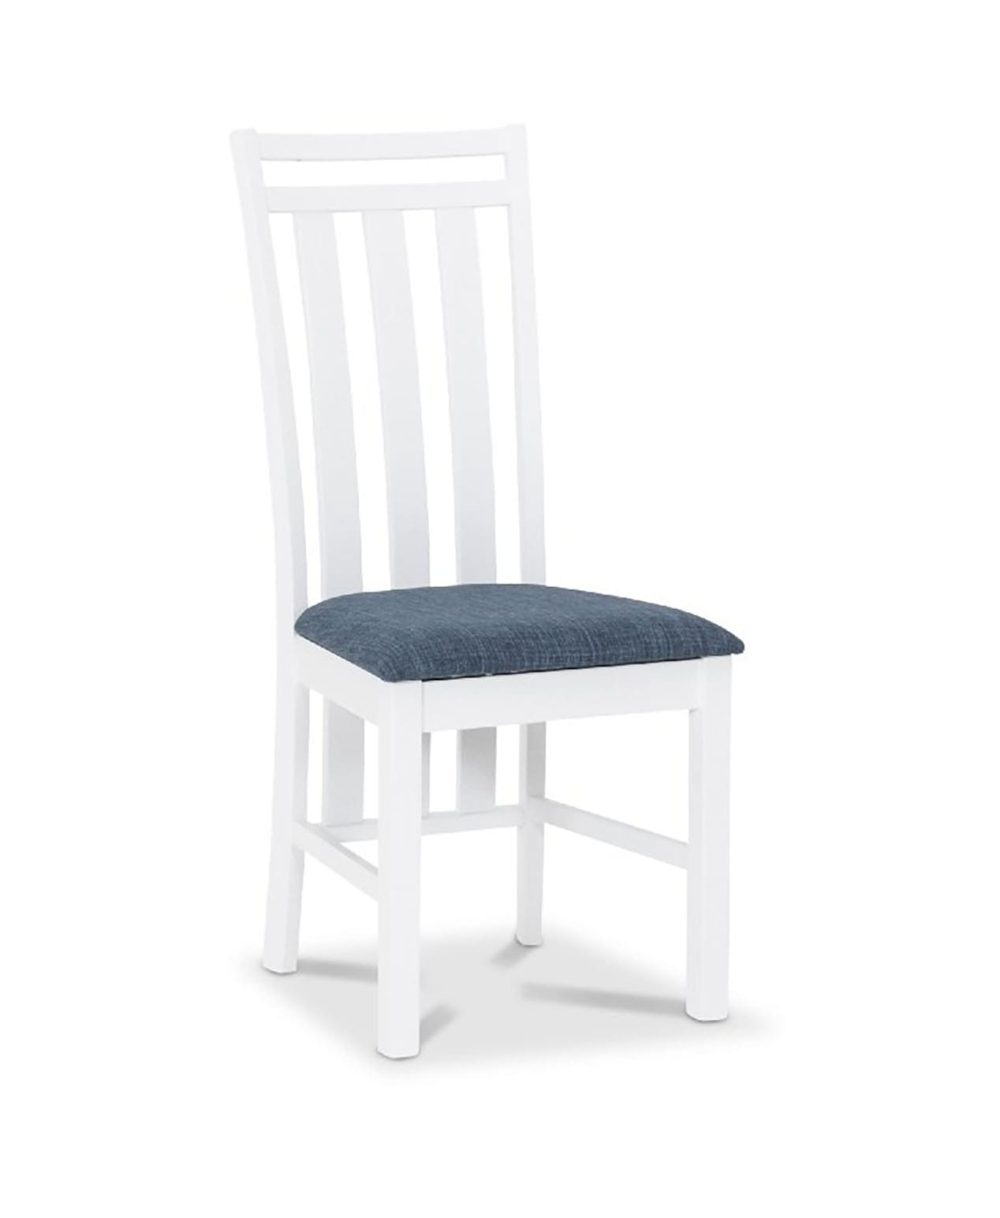 skagen-chair-white-blue-seat-profile.jpg